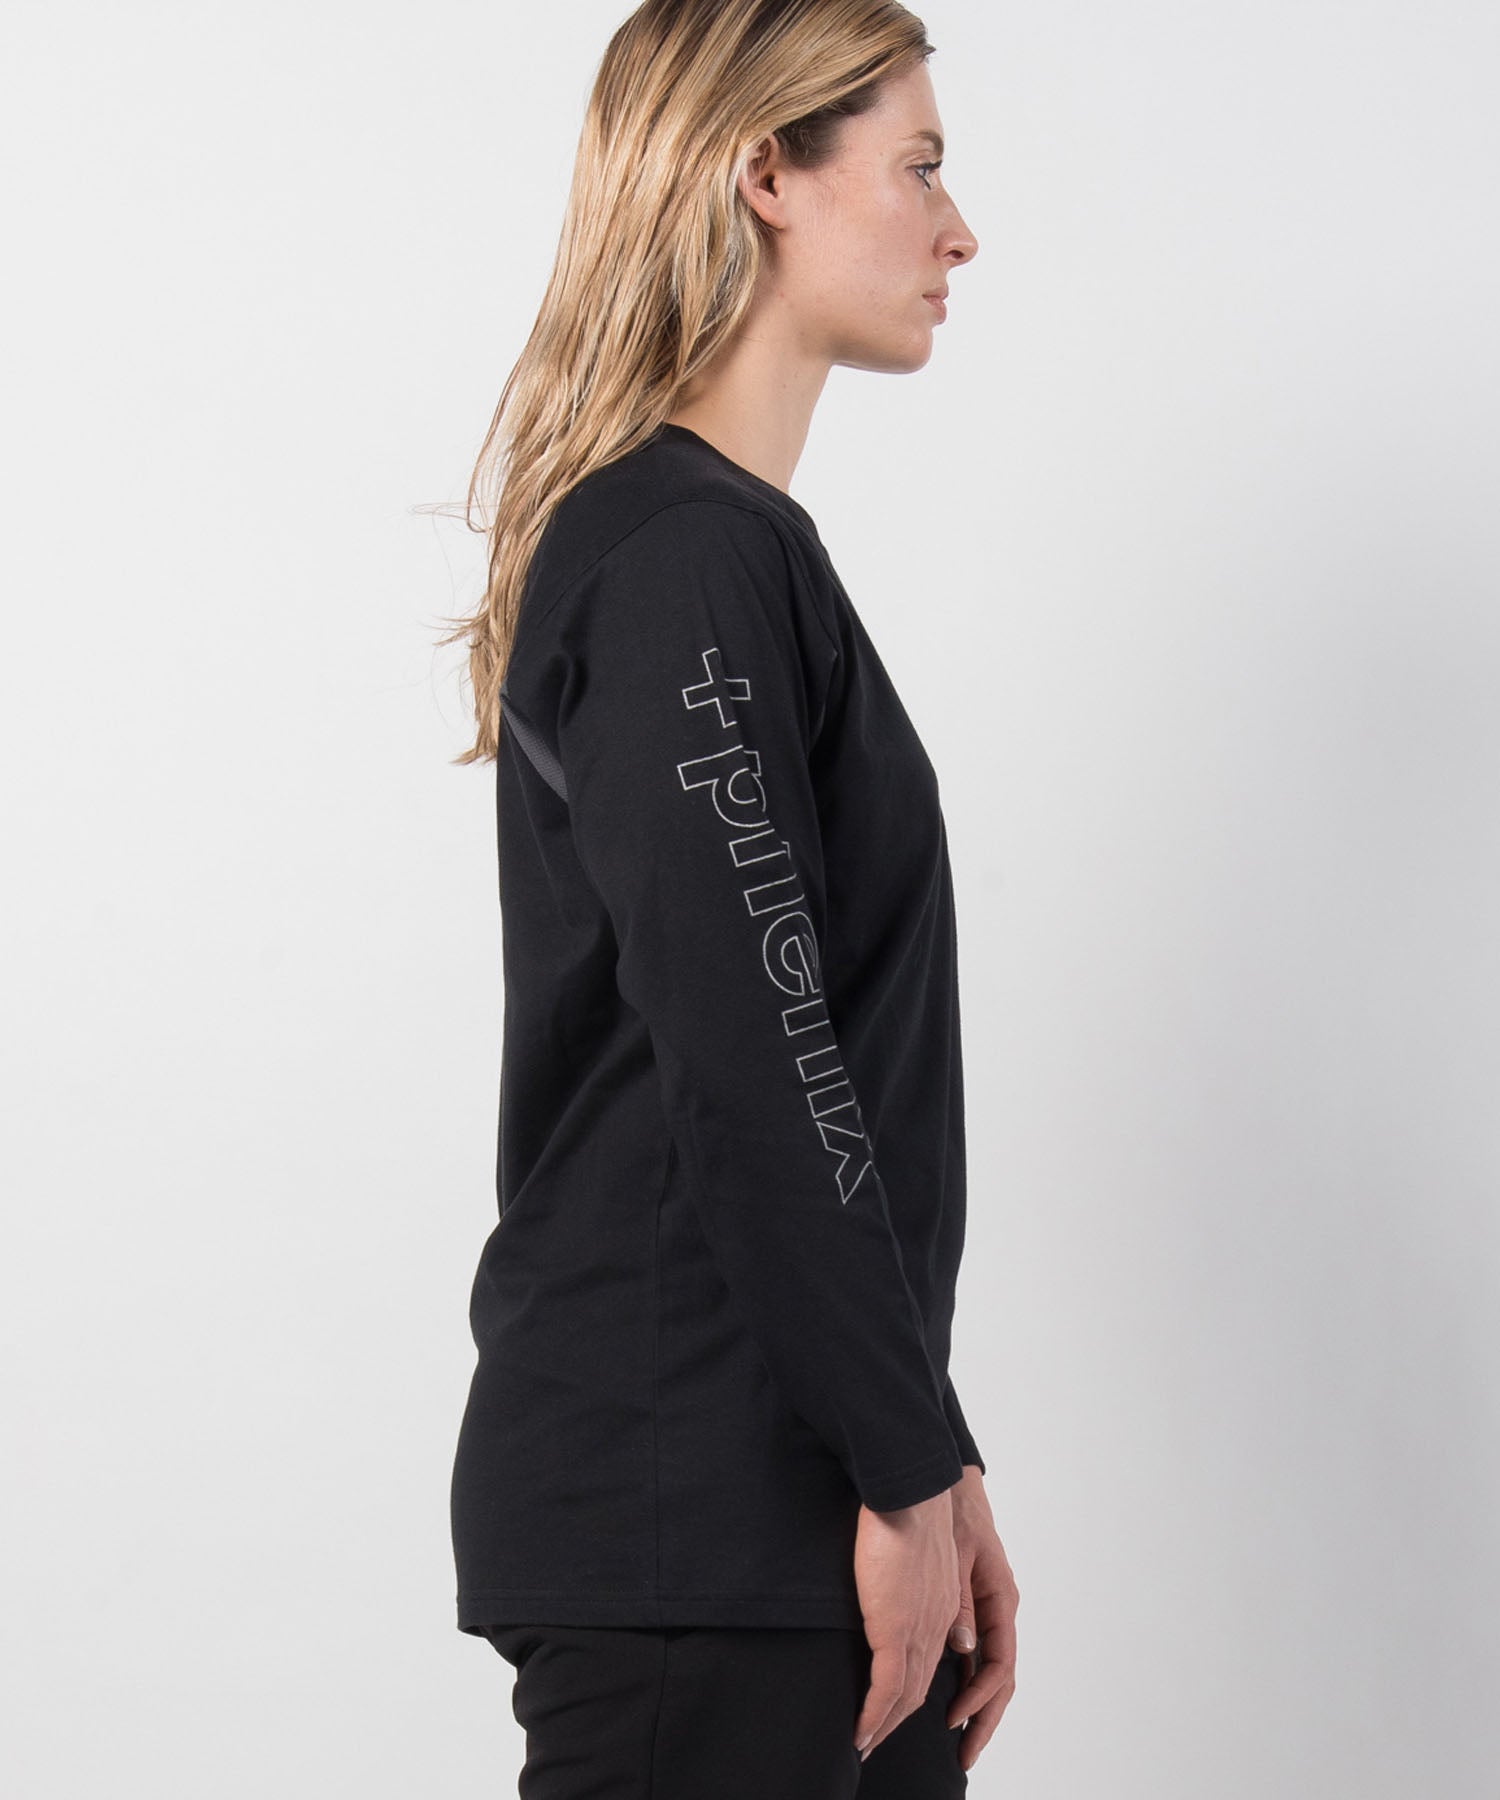 【WOMENS】速乾ロングスリーブTシャツ Mesh Parts LS-Shirt テックウェア アーバンアウトドア 高機能ウェア +phenix(プラスフェニックス)